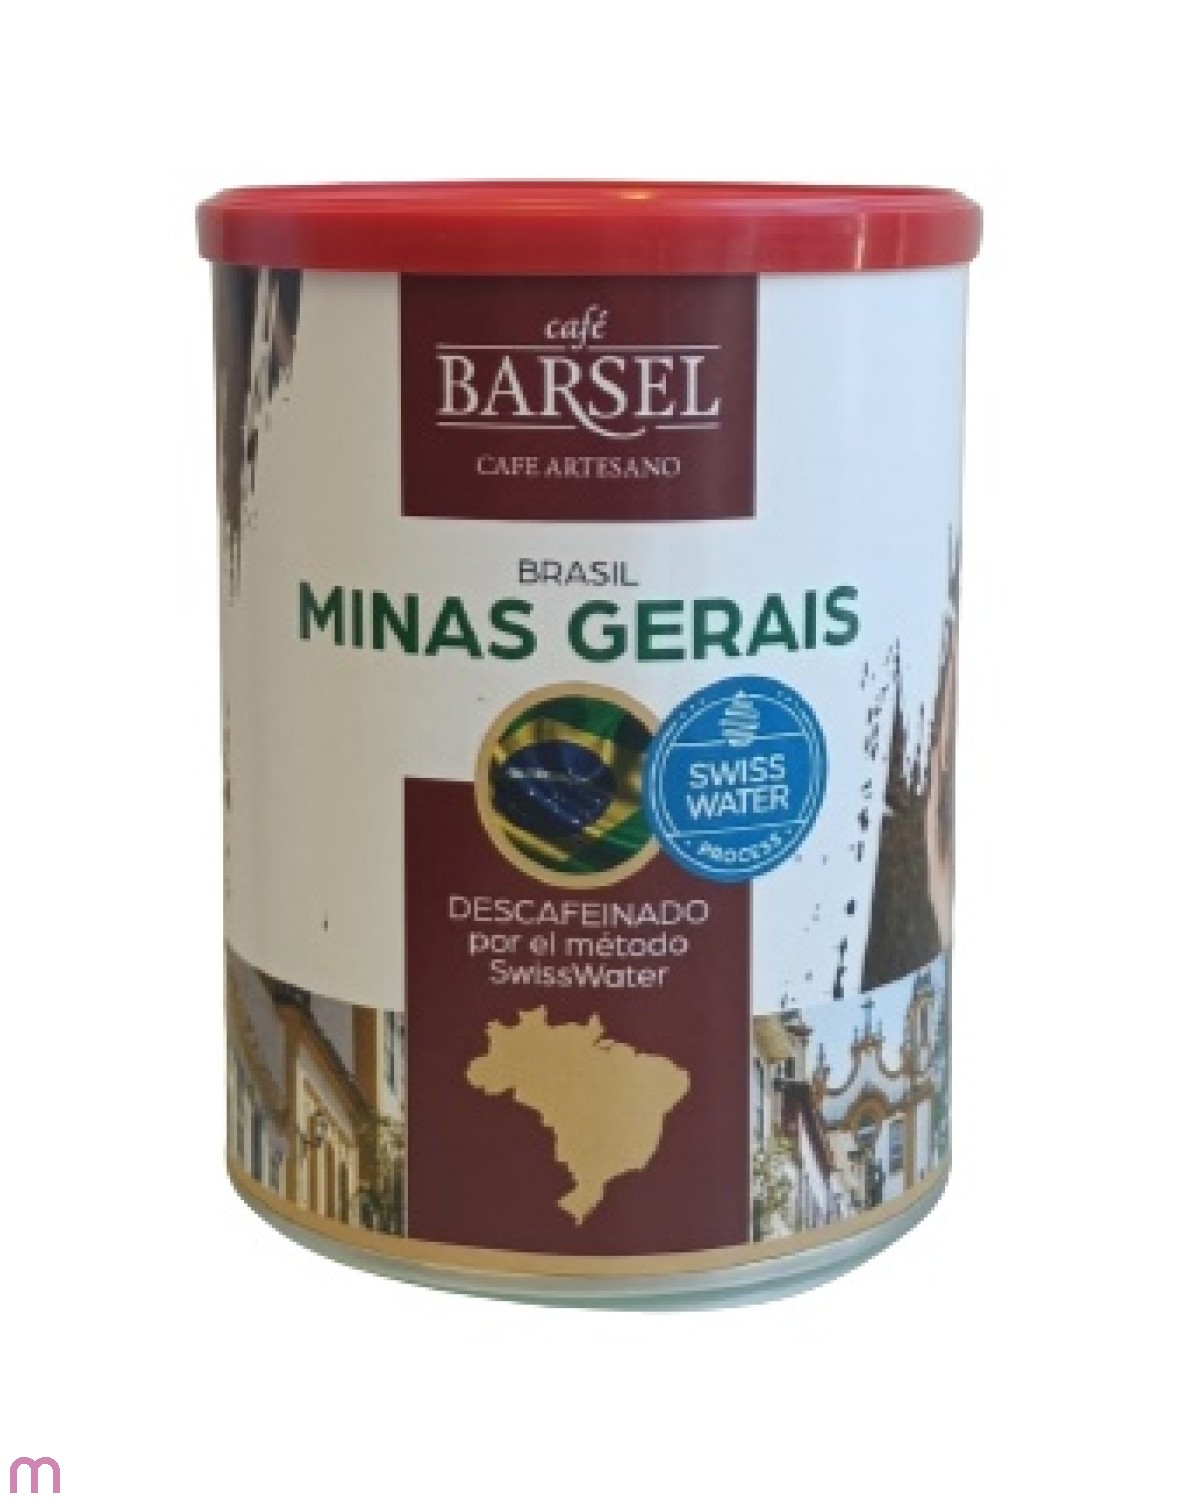 Cafe Barsel Brasil Minas gerais entkoffeiniert 500 g gemahlen